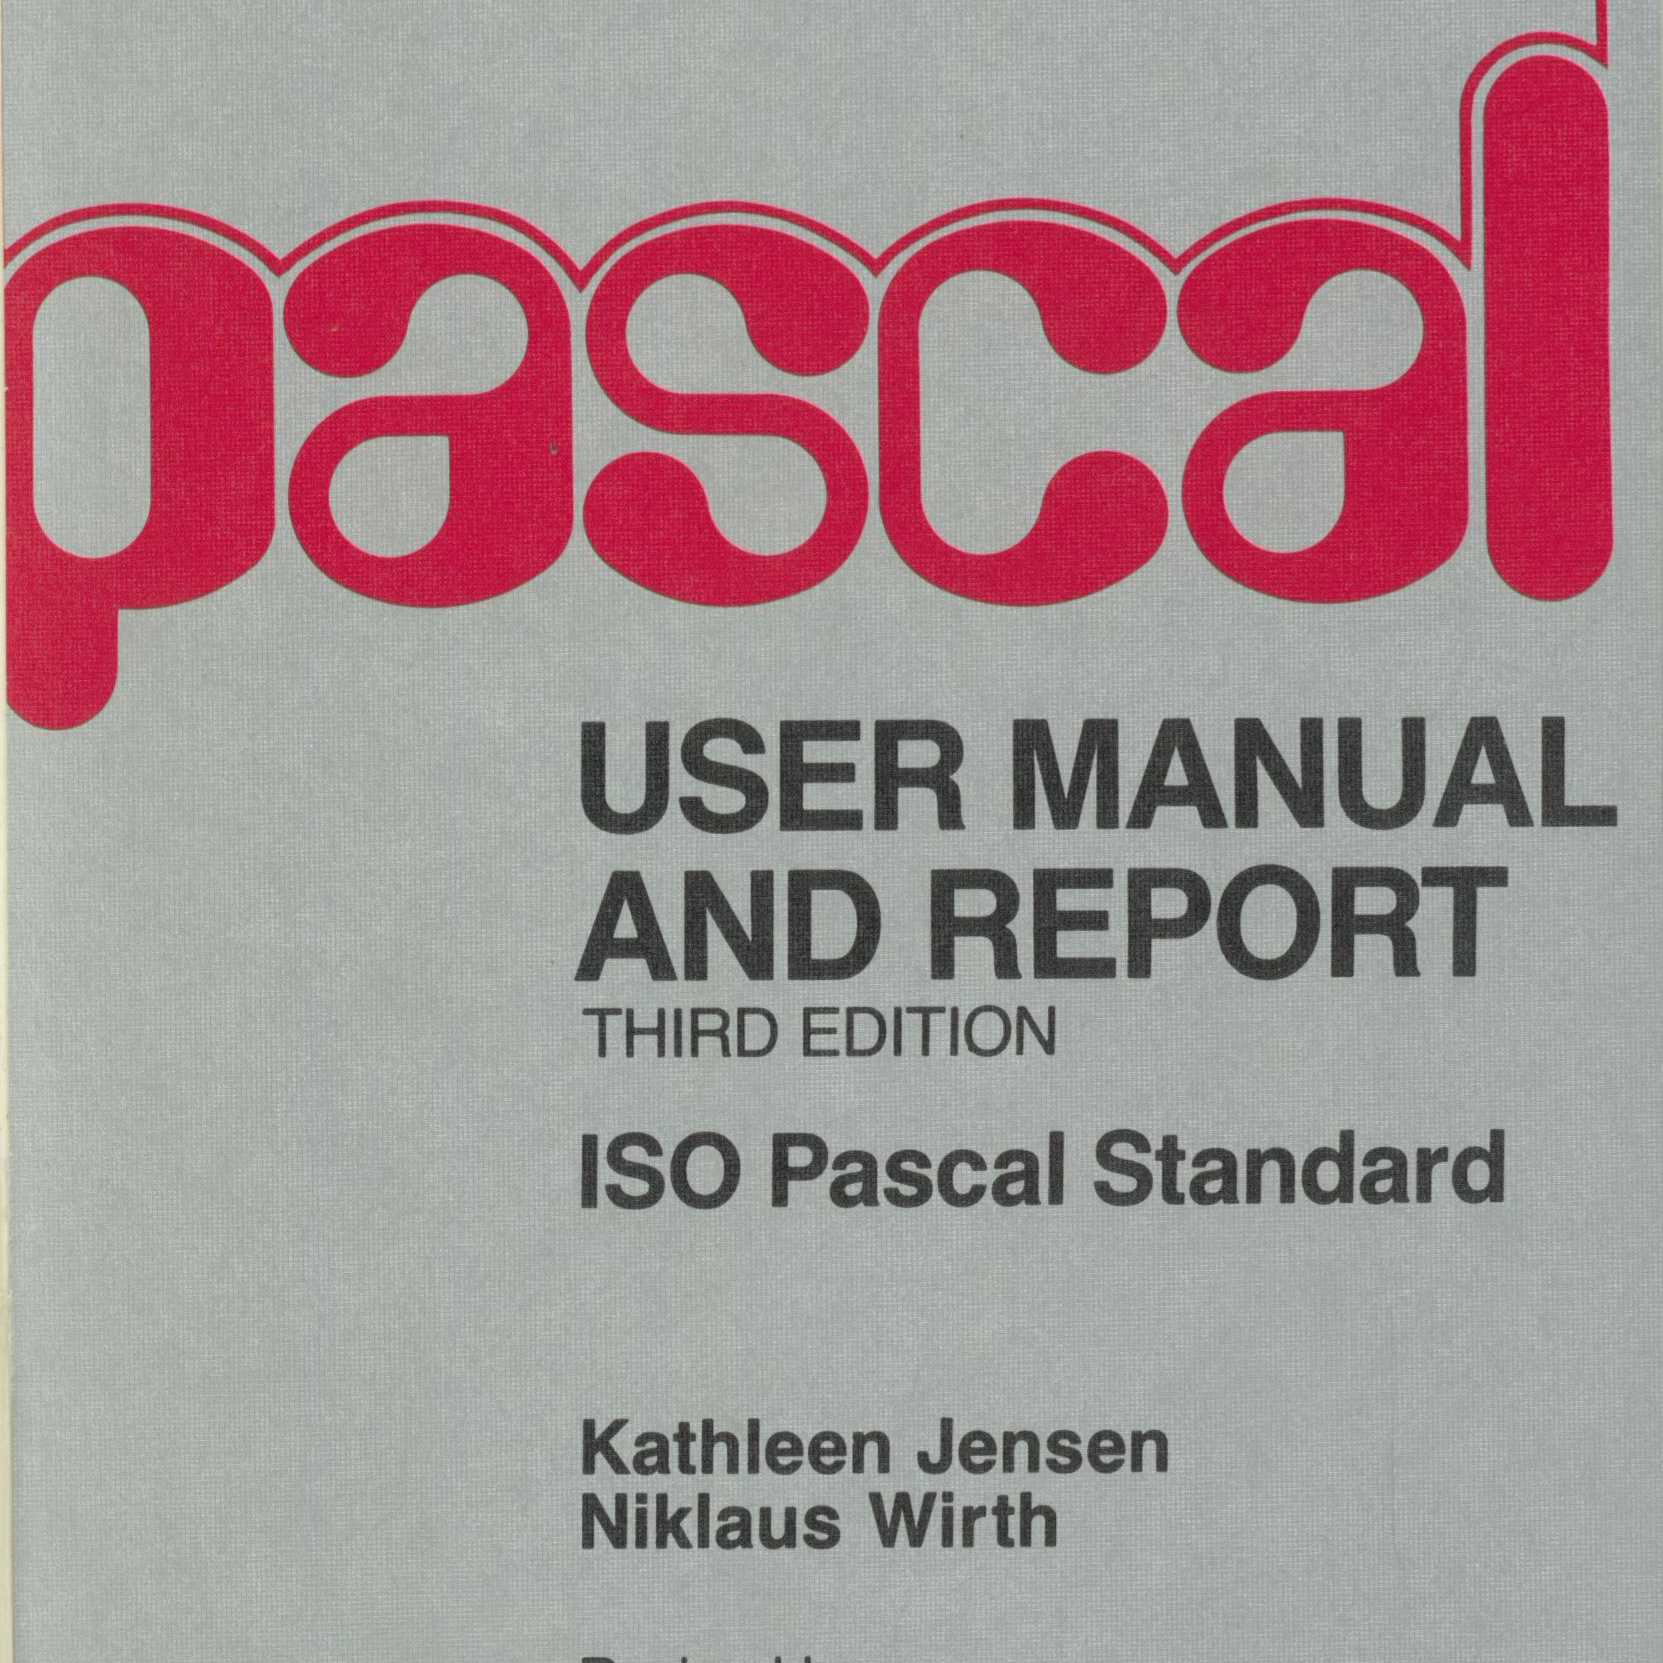 Pascal programming language